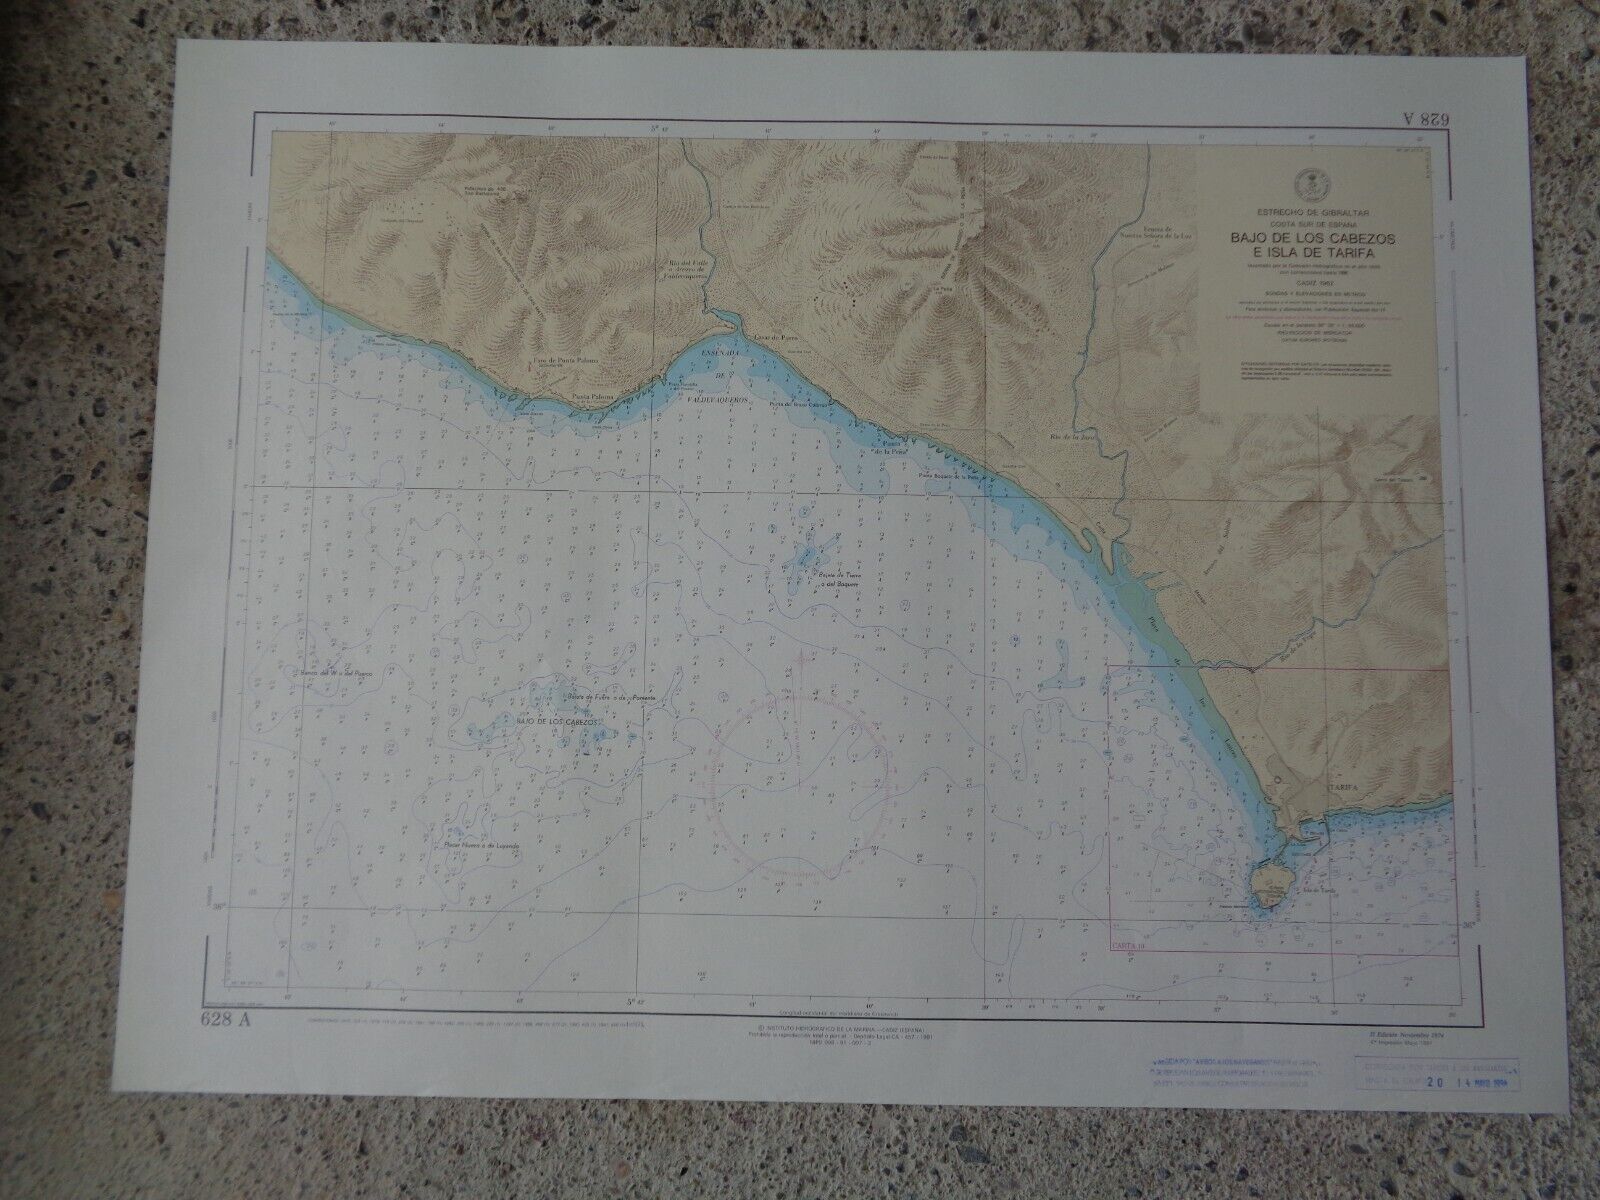 MARINE CARD maritime Bajo de Los Cabezos and island of Tarifa